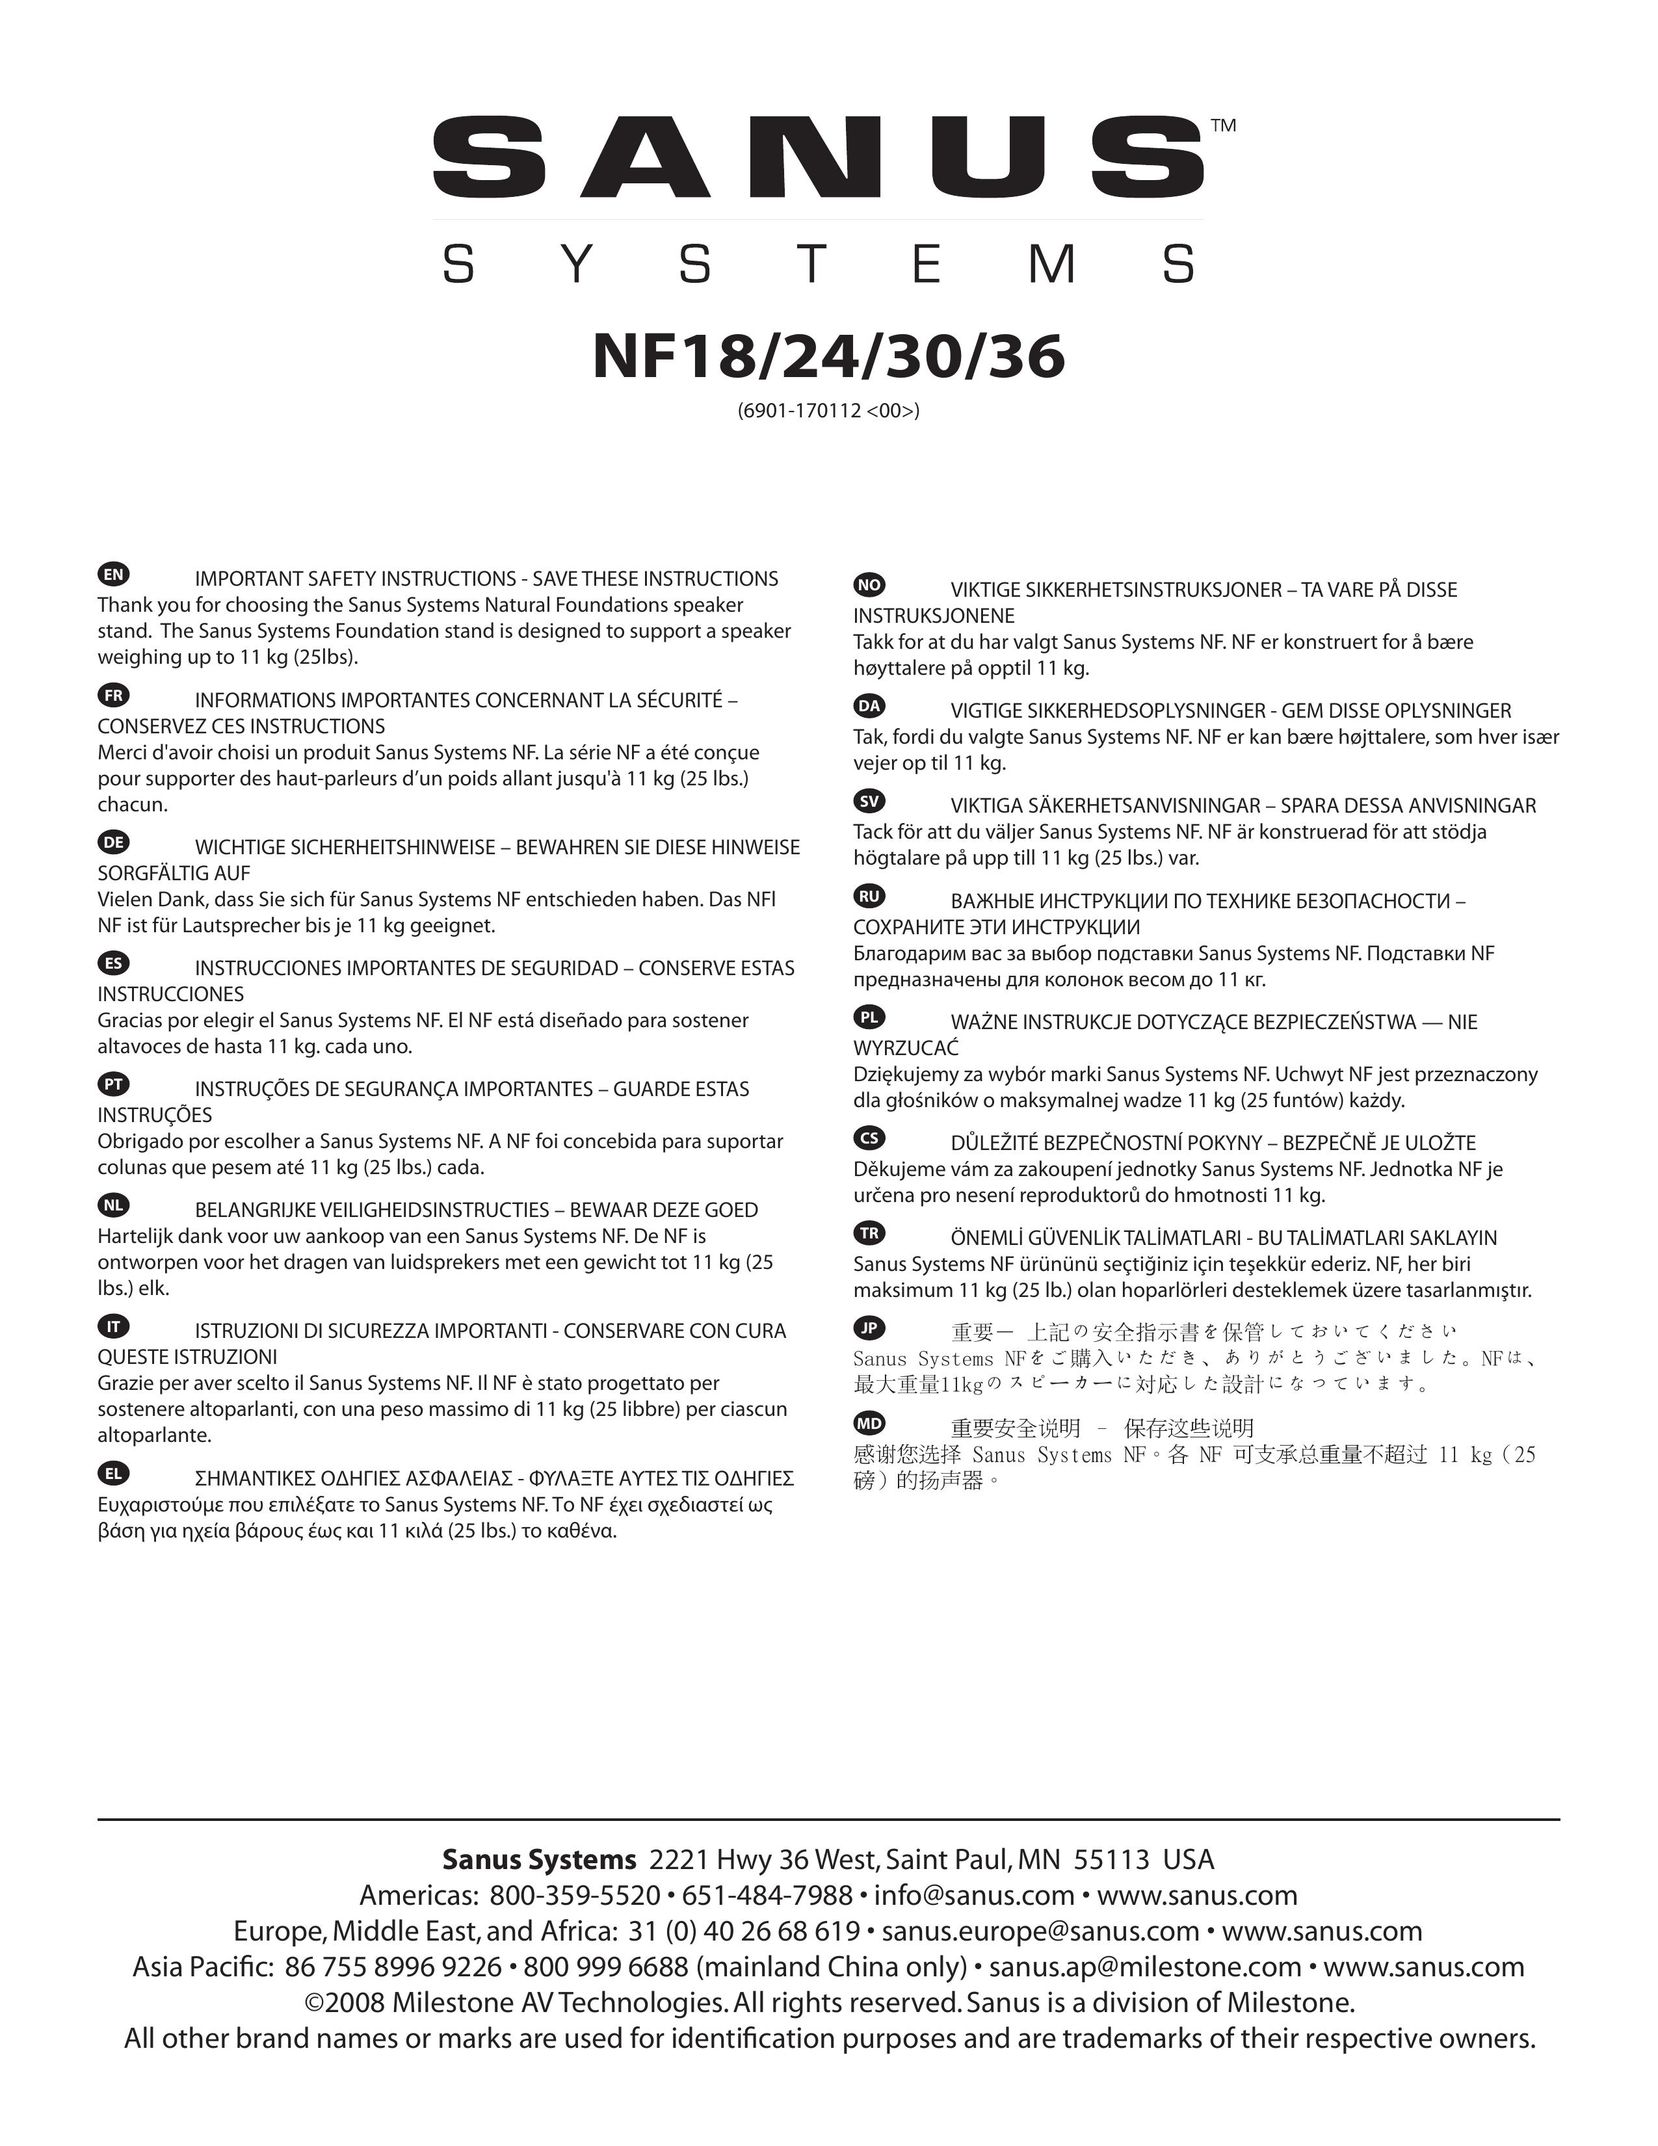 Sanus Systems NF36 Indoor Furnishings User Manual